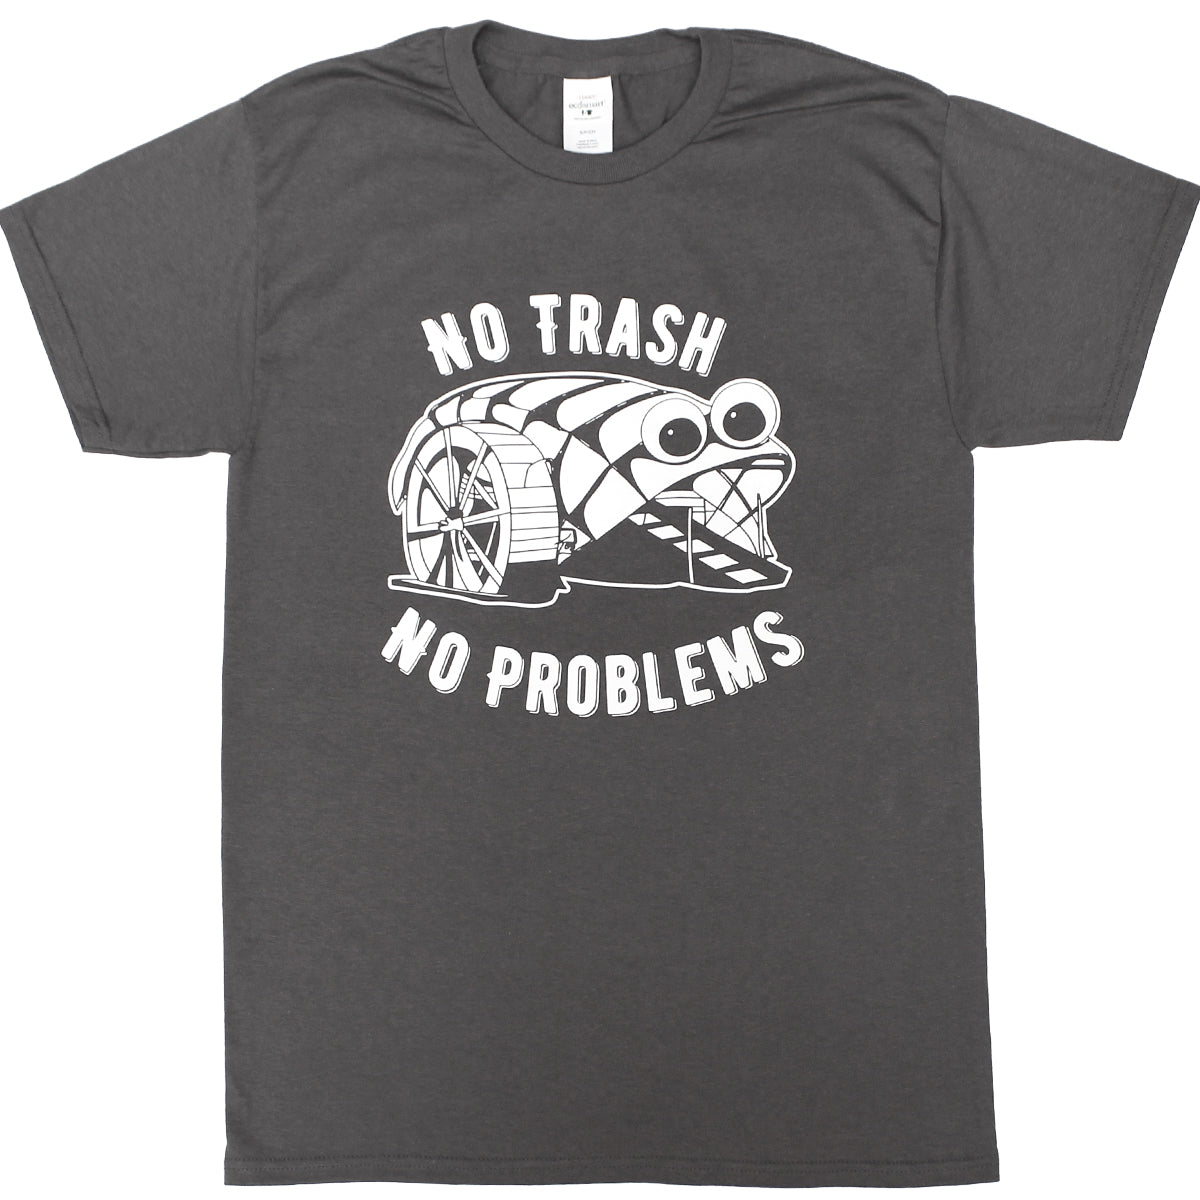 Mr. Trash Wheel - No Trash No Problems (Smoke Grey) / Shirt - Route One Apparel